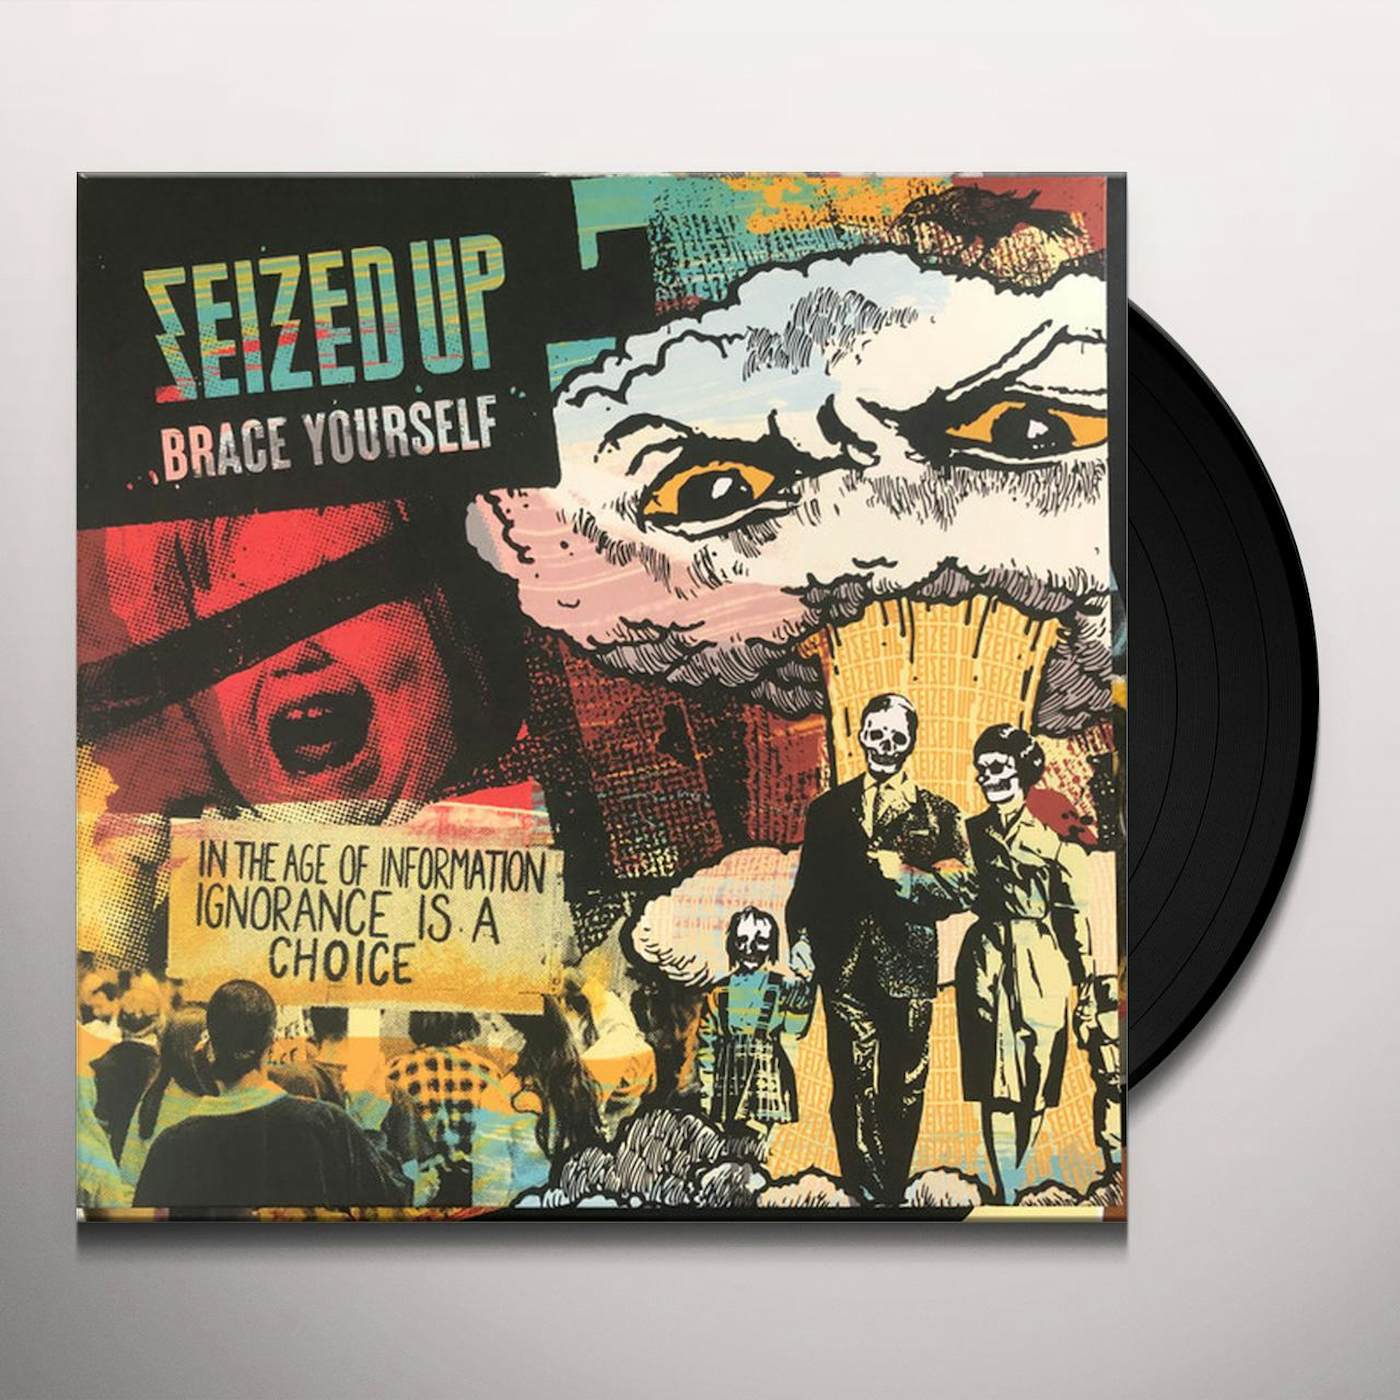 Seized Up Brace Yourself Vinyl Record